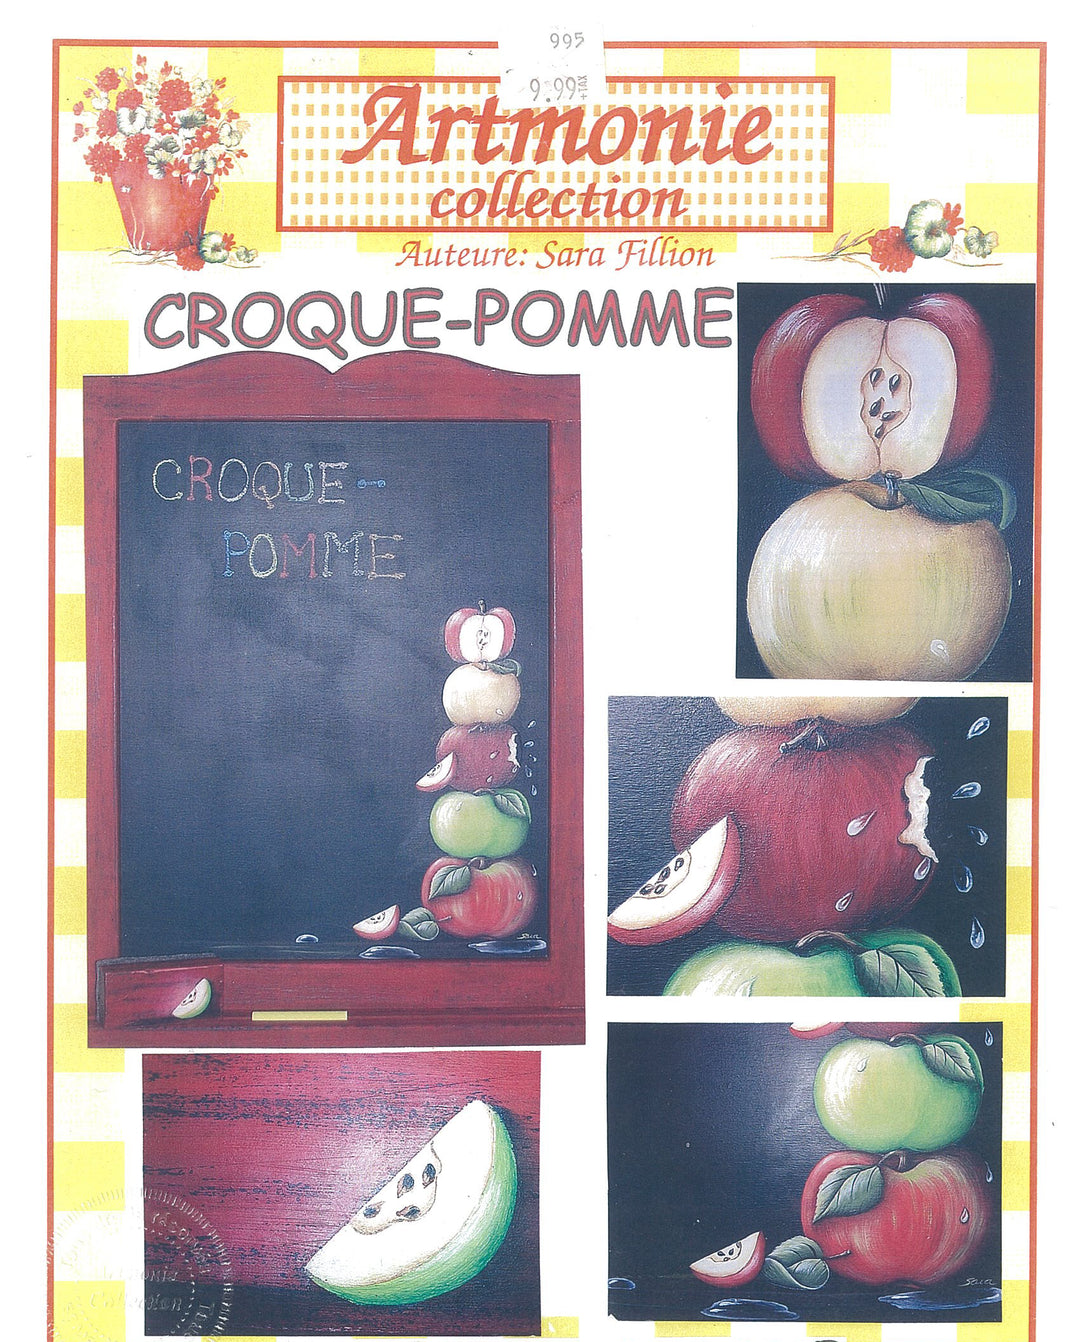 Croque-pomme /Sara Fillion